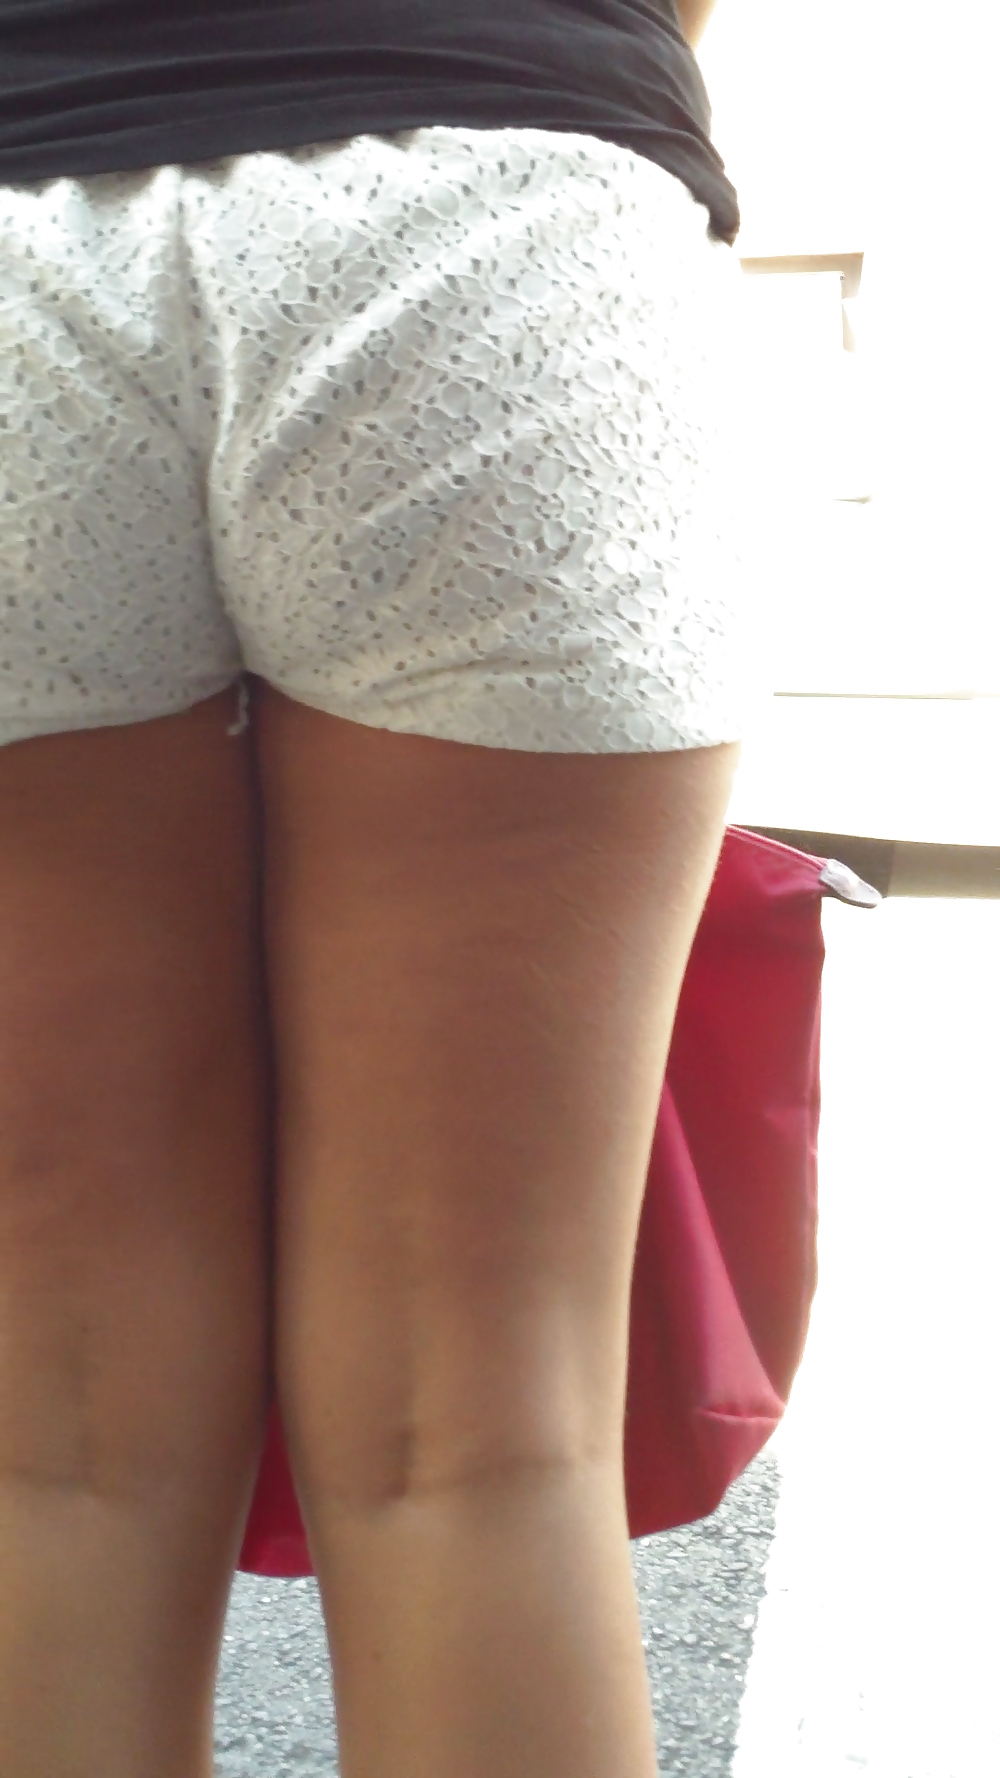 Some nice public butt cracks & ass cheeks in shorts  #21359529